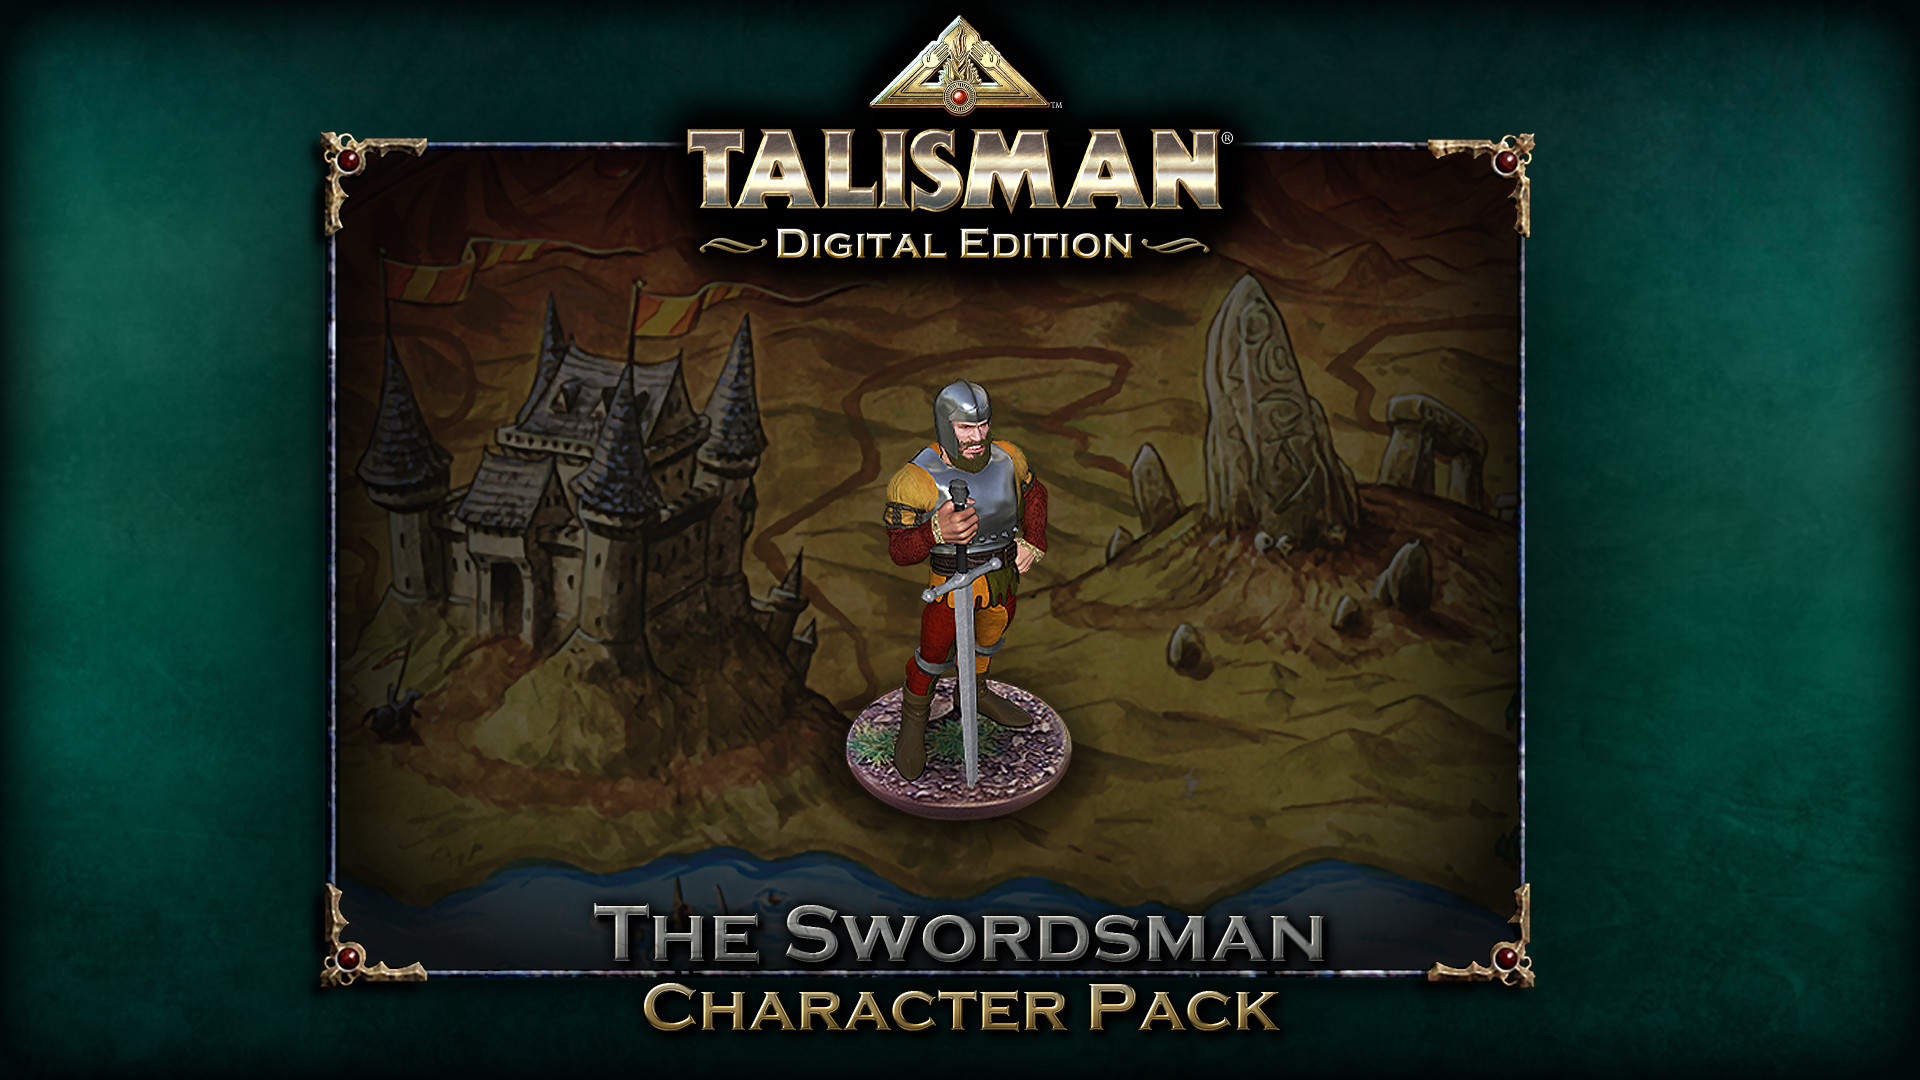 [$ 0.97] Talisman - Character Pack #19 Swordsman DLC Steam CD Key